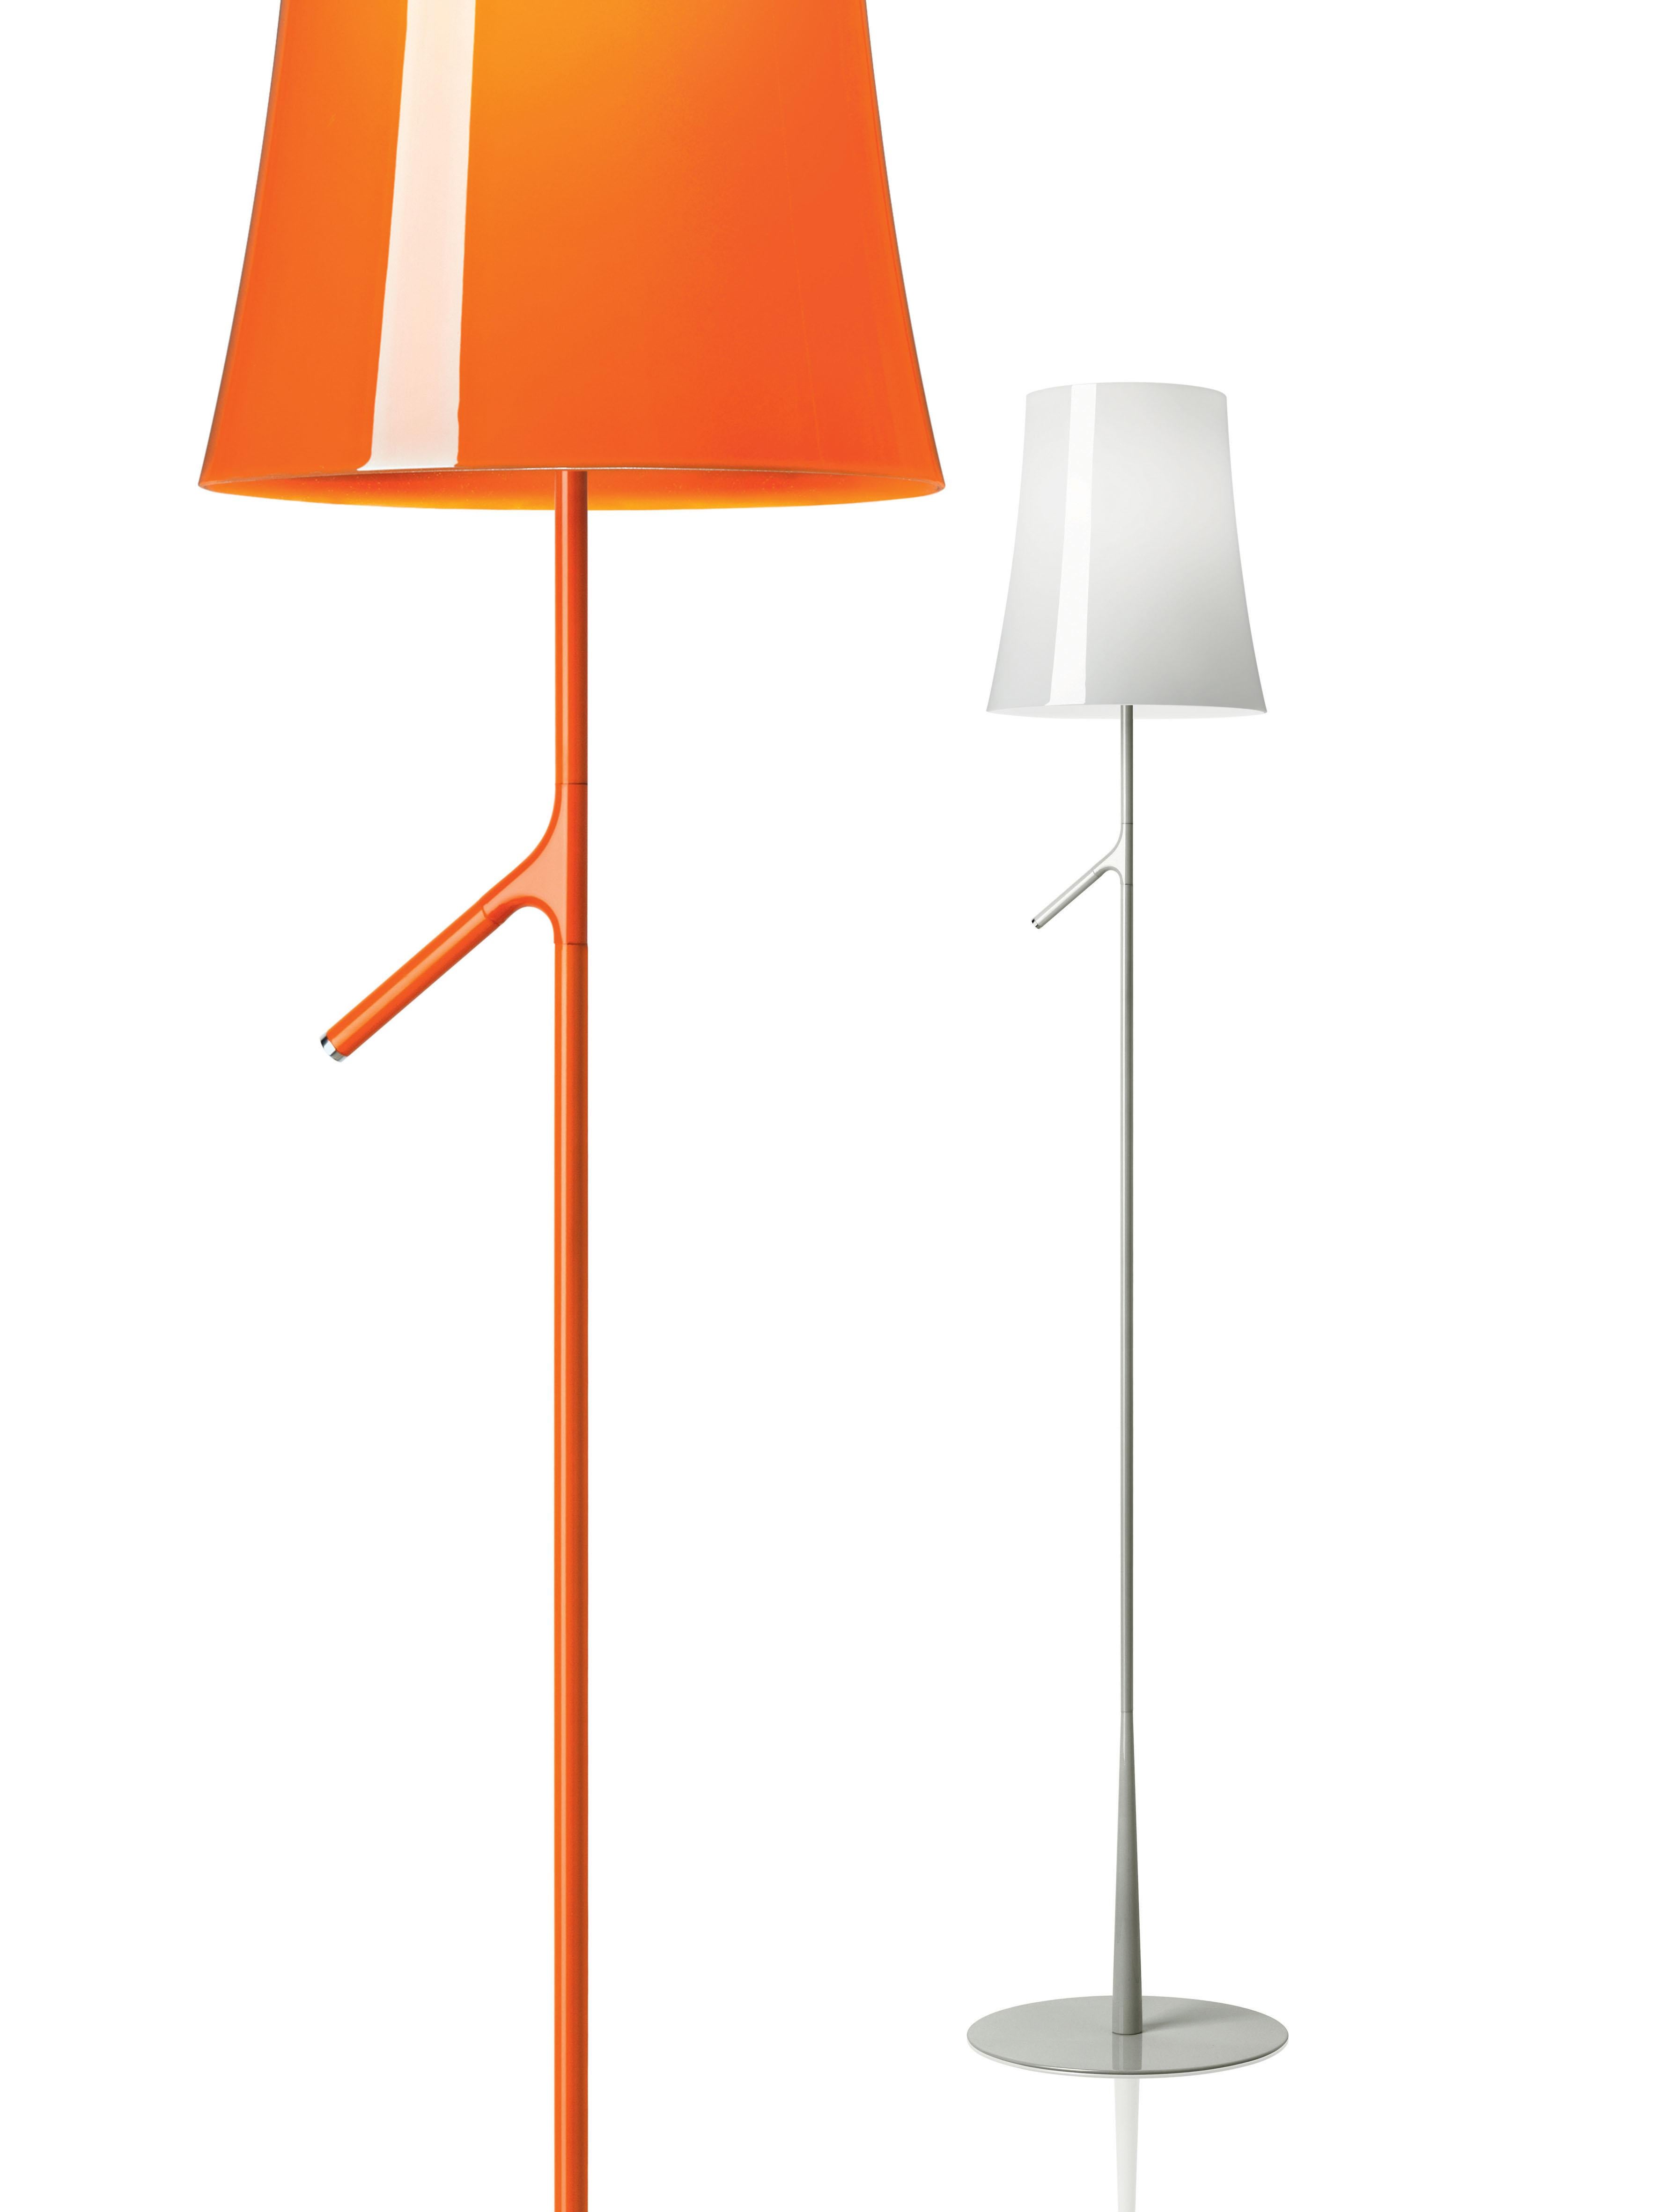 Italian Foscarini Dimmable Birdie Floor Lamp in Graphite by Ludovica & Roberto Palomba For Sale